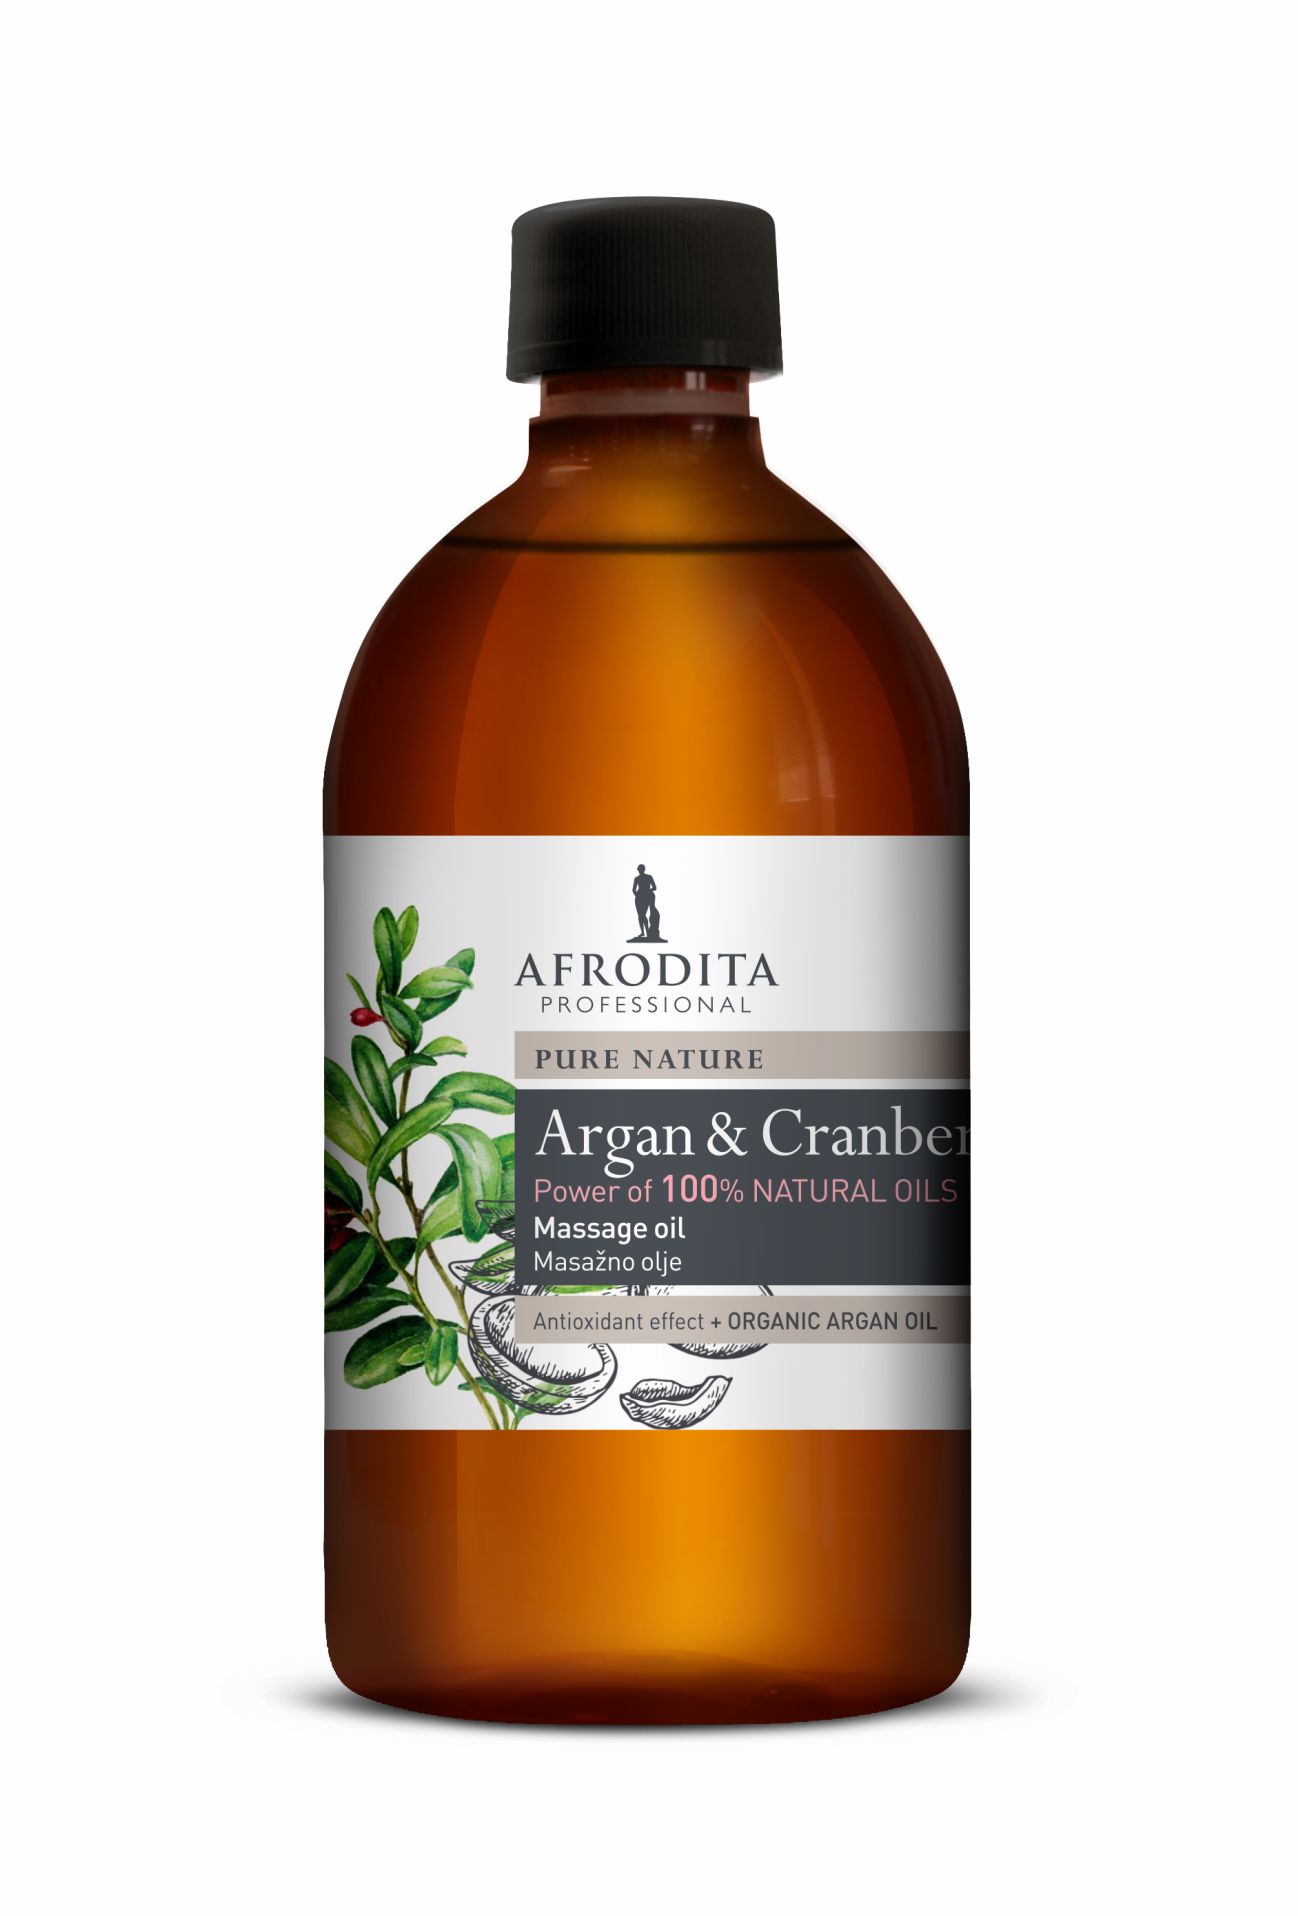 Kozmetika Afrodita - Olej do masażu 500 ml - Argan & Żurawina